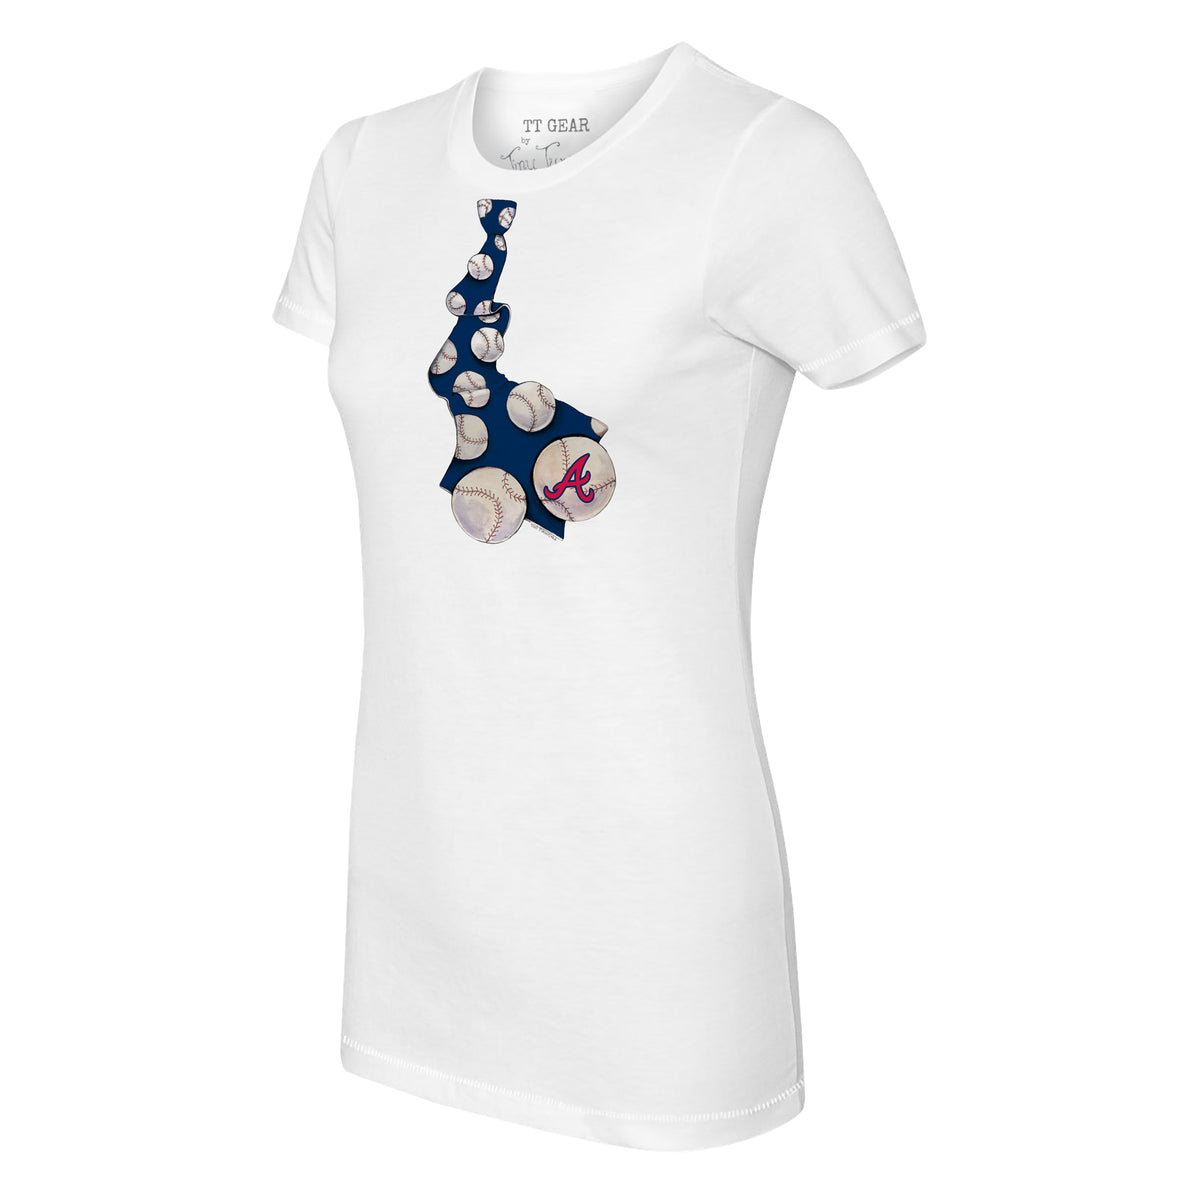 Youth Tiny Turnip White Houston Astros Stitched Baseball T-Shirt Size: Small